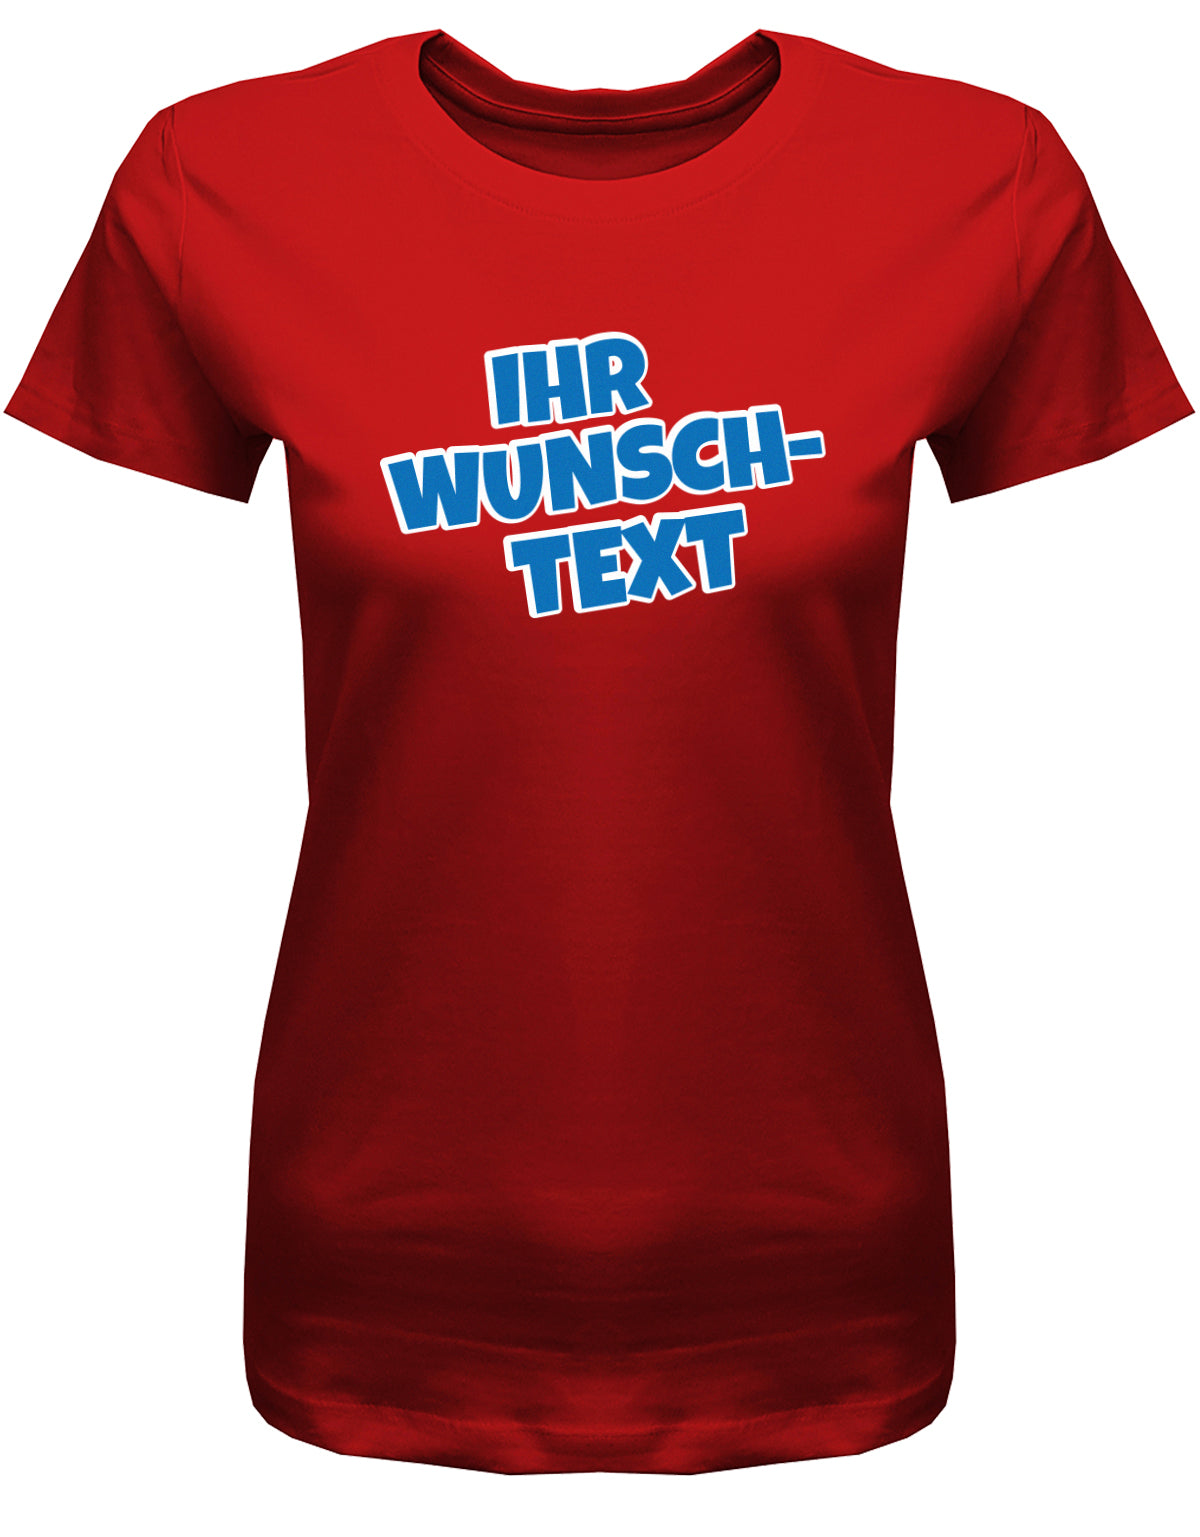 Frauen Tshirt mit Wunschtext.  Comic Schriftart mit weißer Umrandung.  Rot